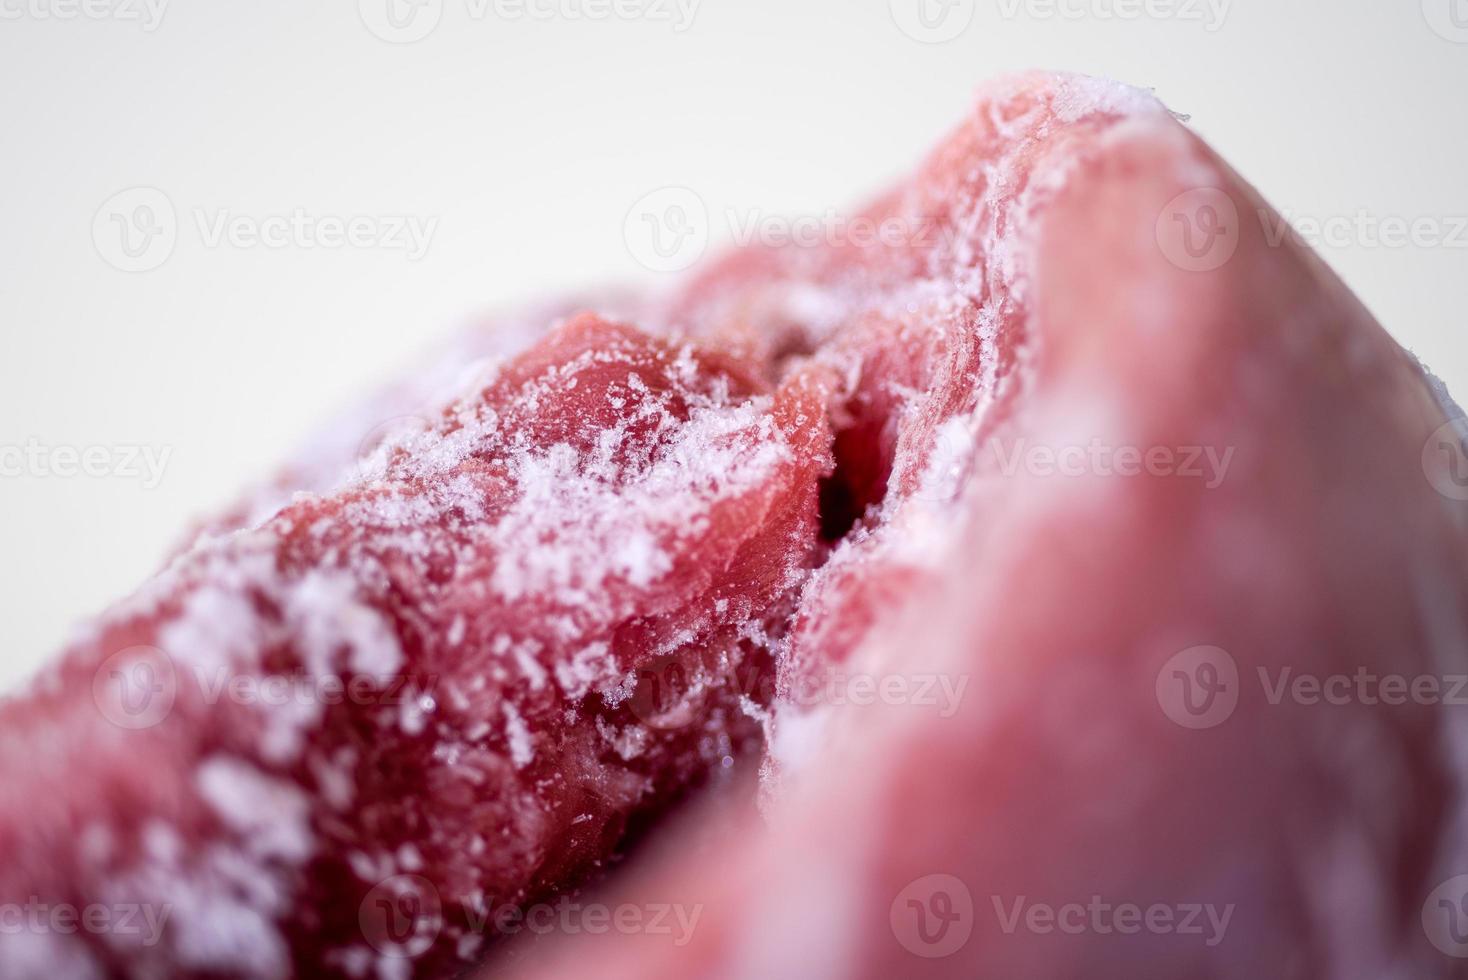 textura de carne crua fresca congelada, close-up, macro foto